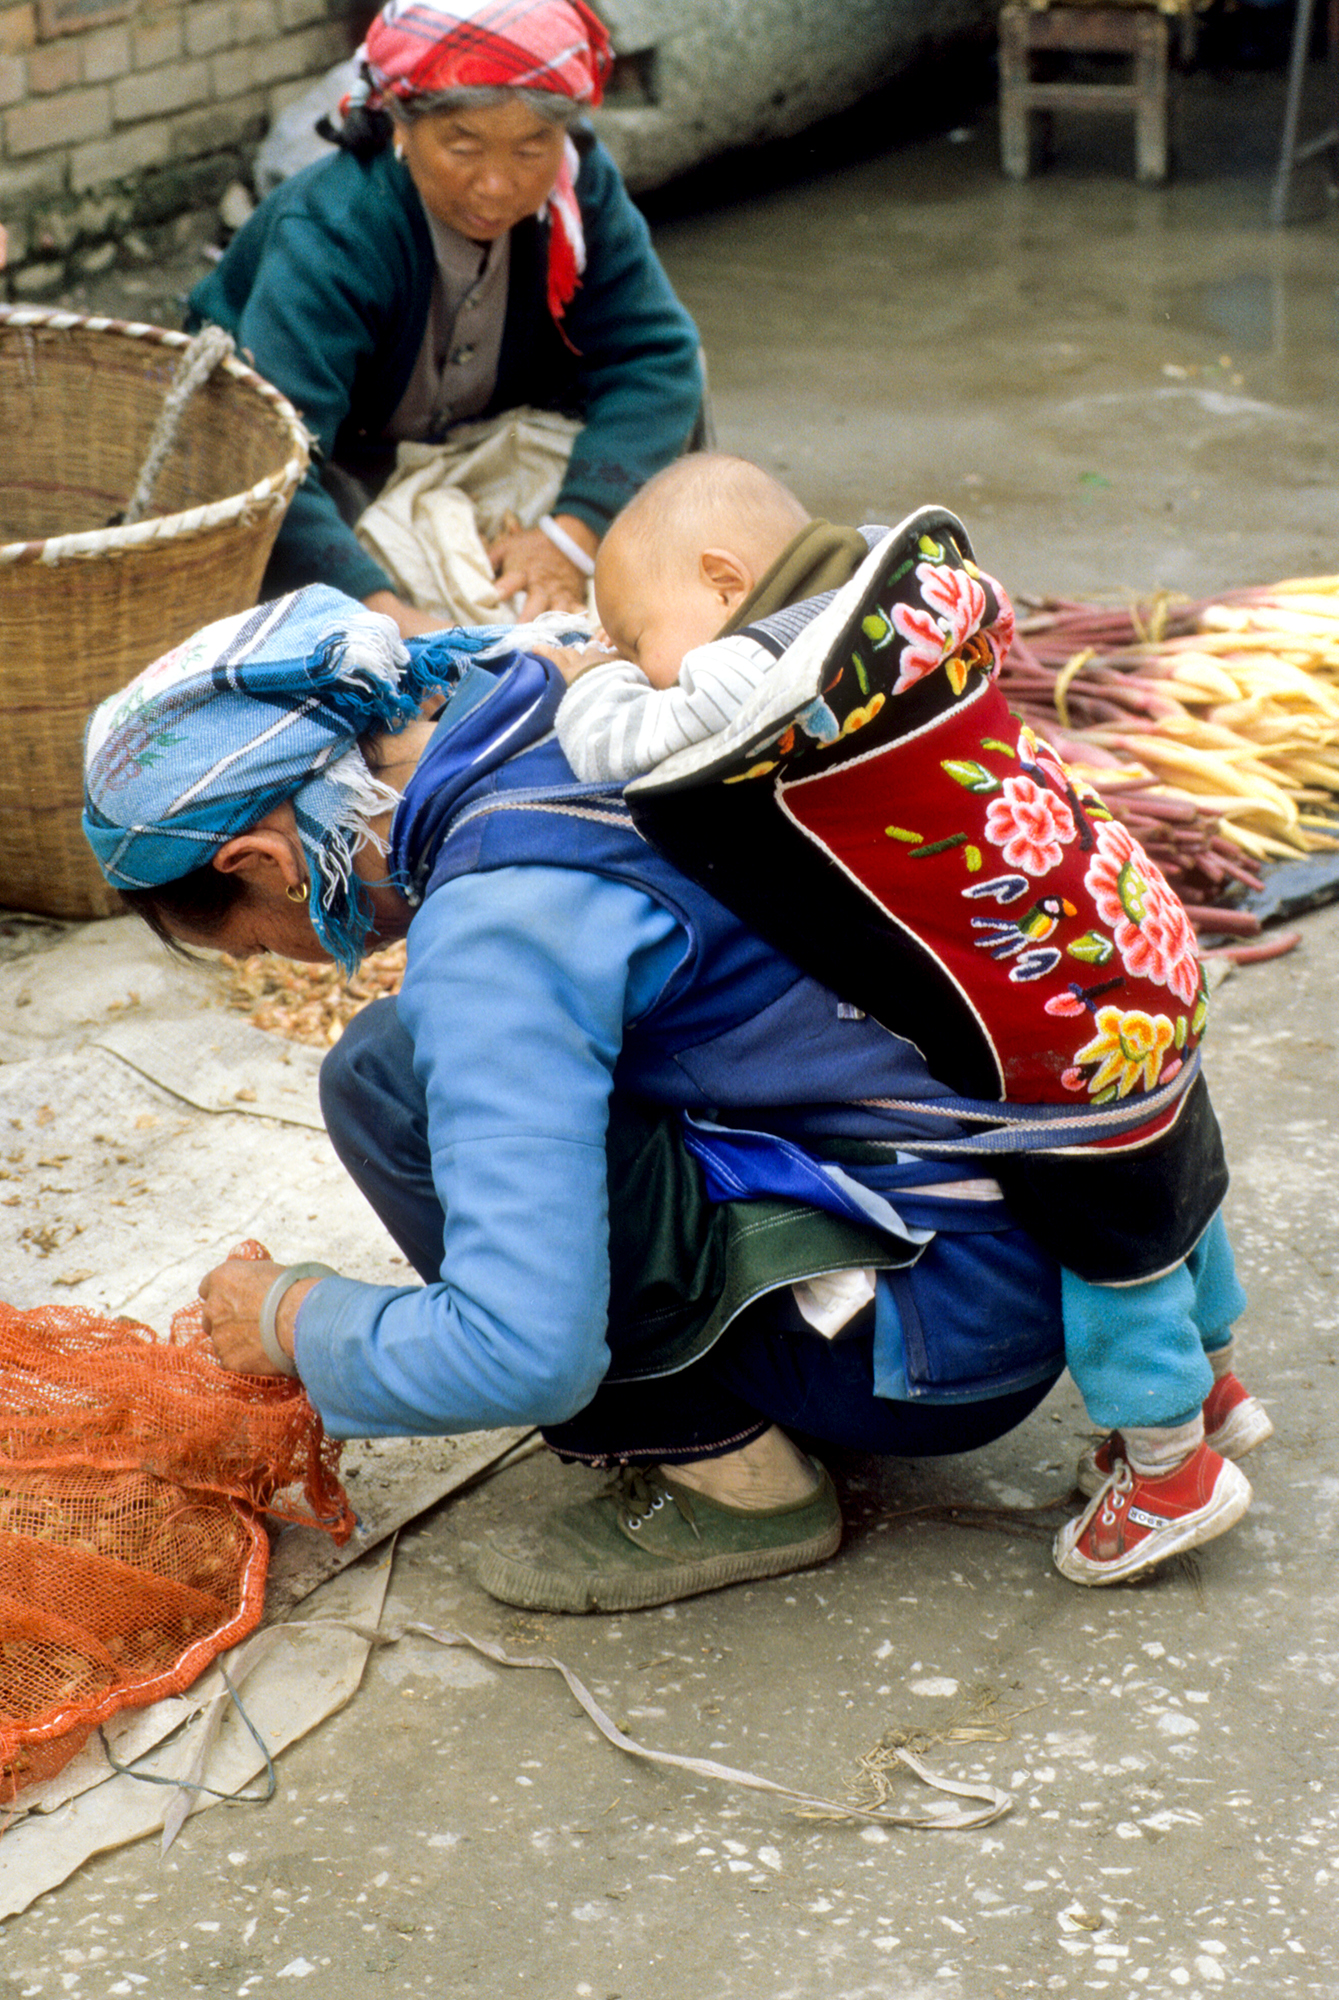 Terry Brandt: Sleepy Shopper - Lijiang, China